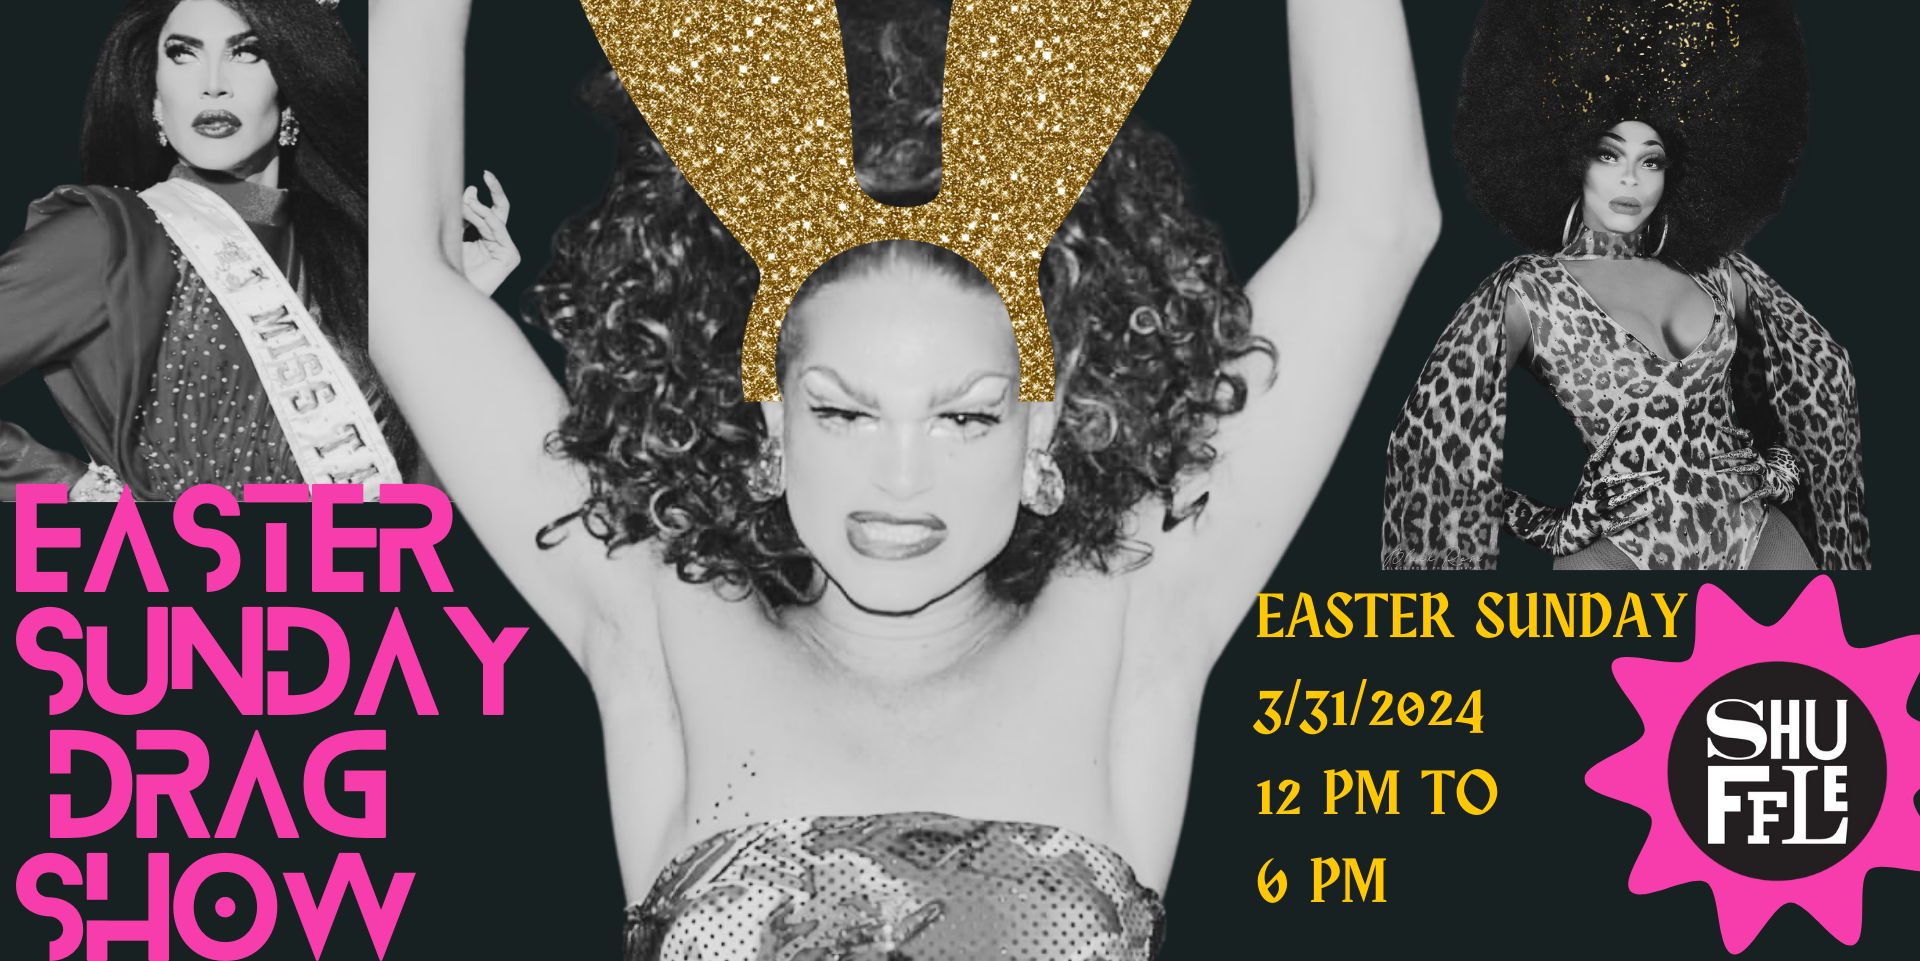 Easter Sunday Drag Show promotional image